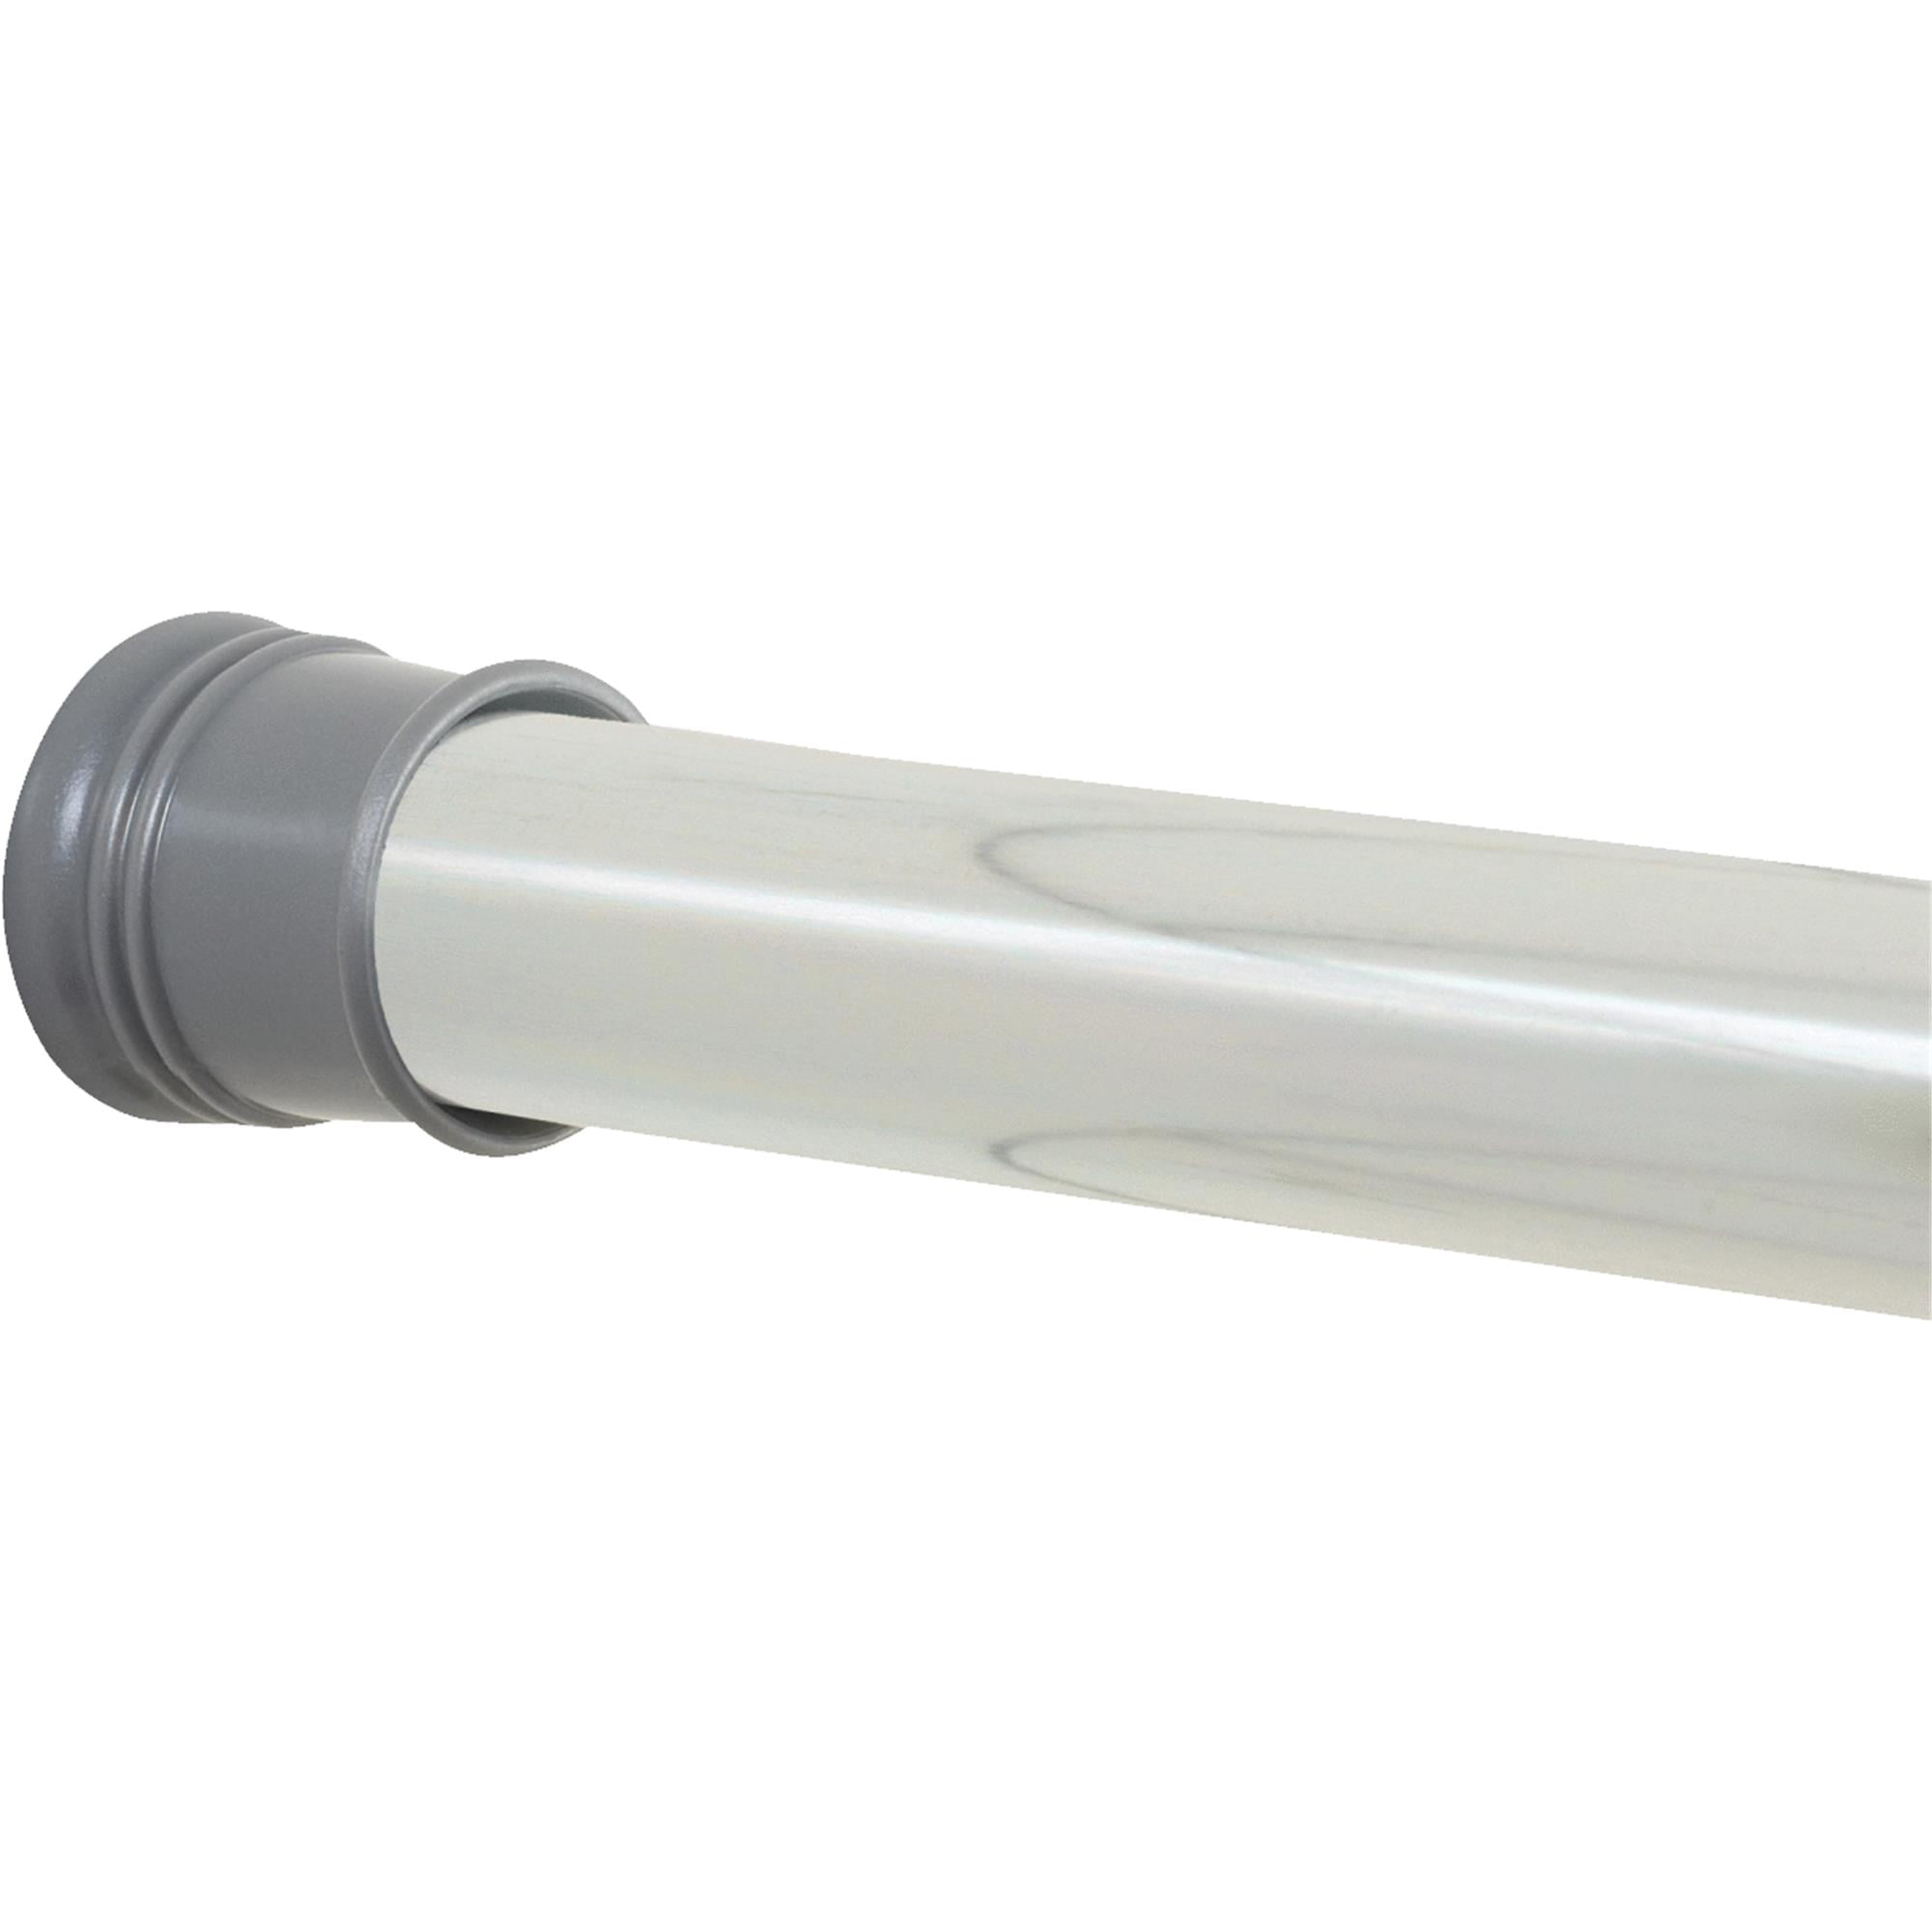 Adjustable Tension Shower Rod, 24 40 Inch Shower Curtain Rod